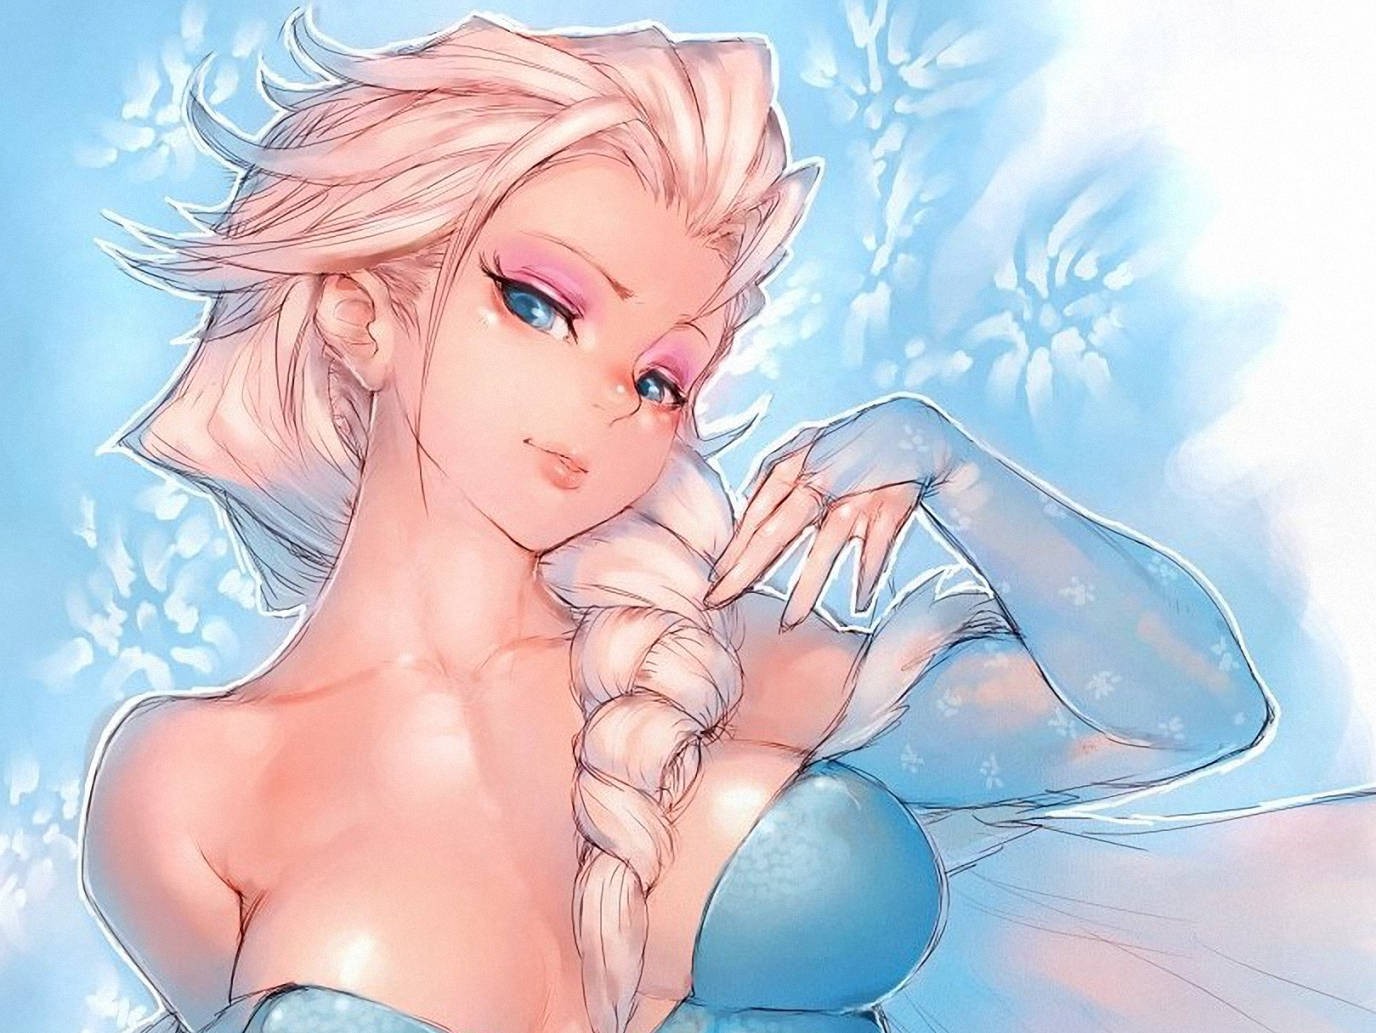 Anime 1376x1033 digital art Frozen (movie) blonde braids blue eyes blue background Elsa Disney princesses boobs looking at viewer women fantasy art fantasy girl